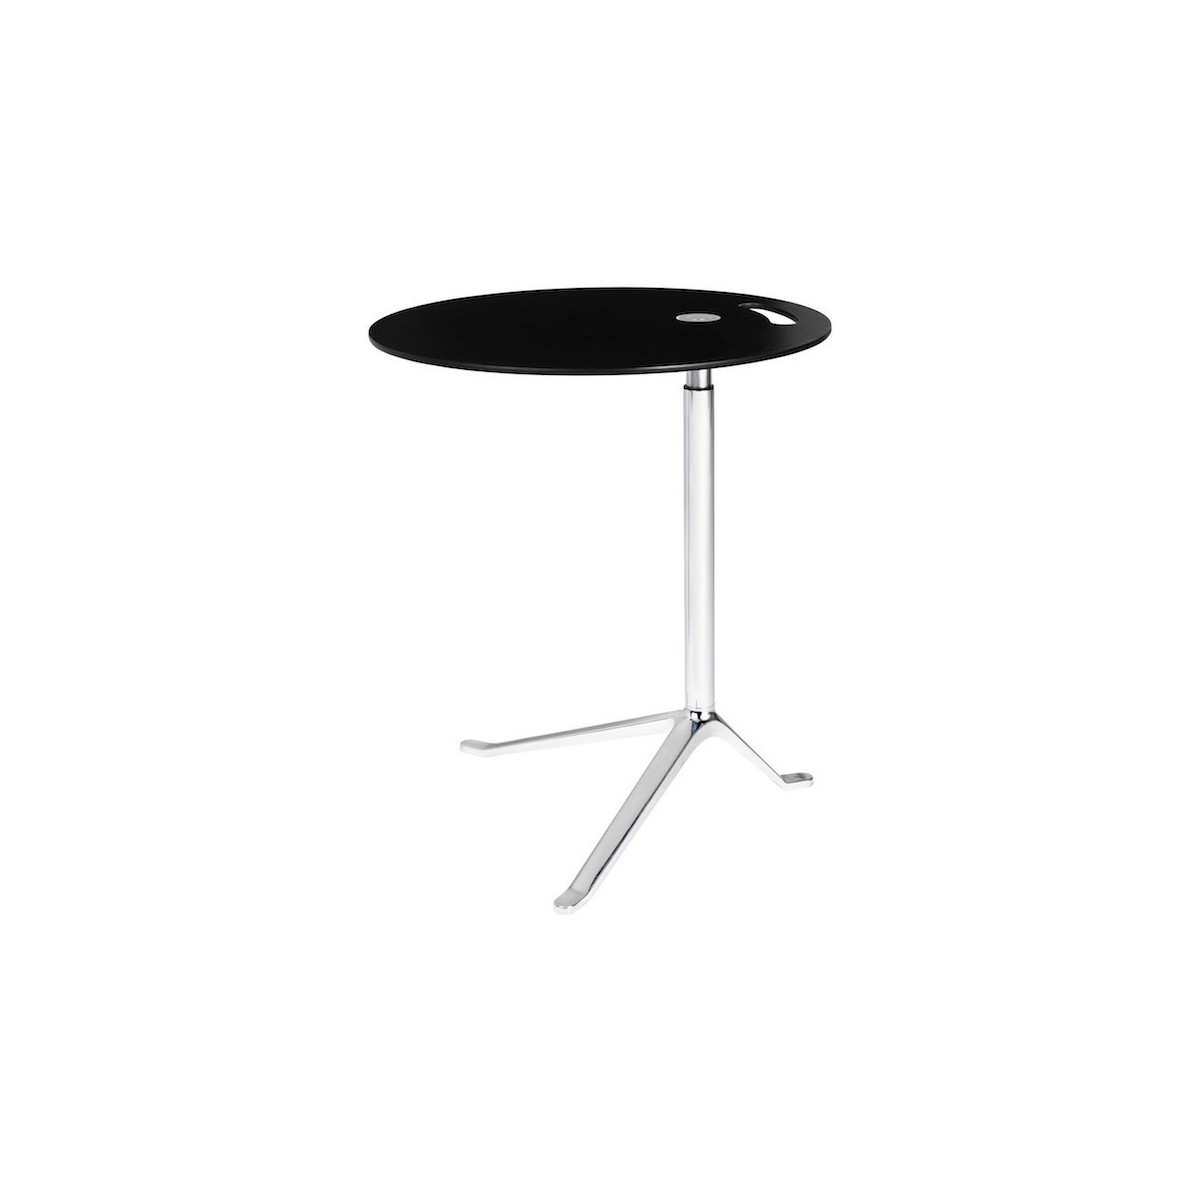 KS11 Little Friend table (Adjustable height) – Black / Chromed